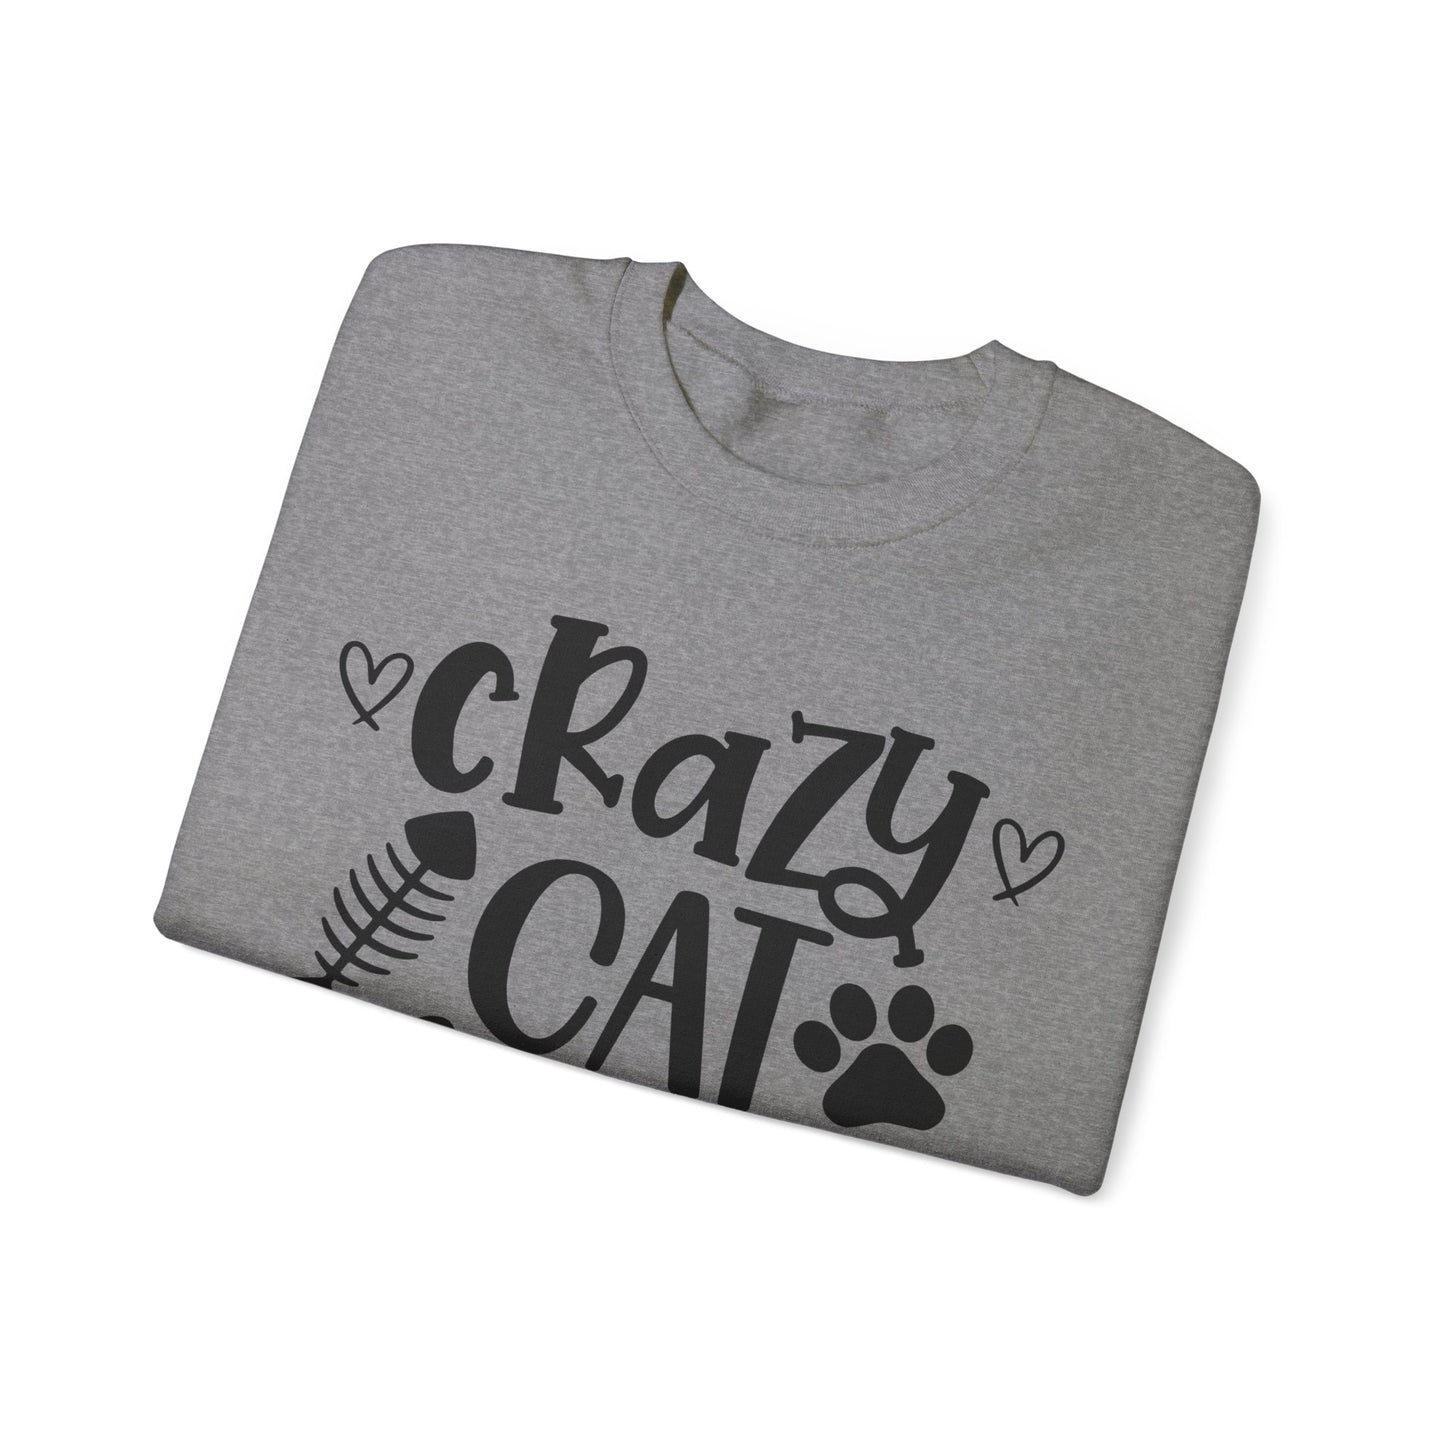 Crazy Cat Lady - Crewneck Sweatshirt